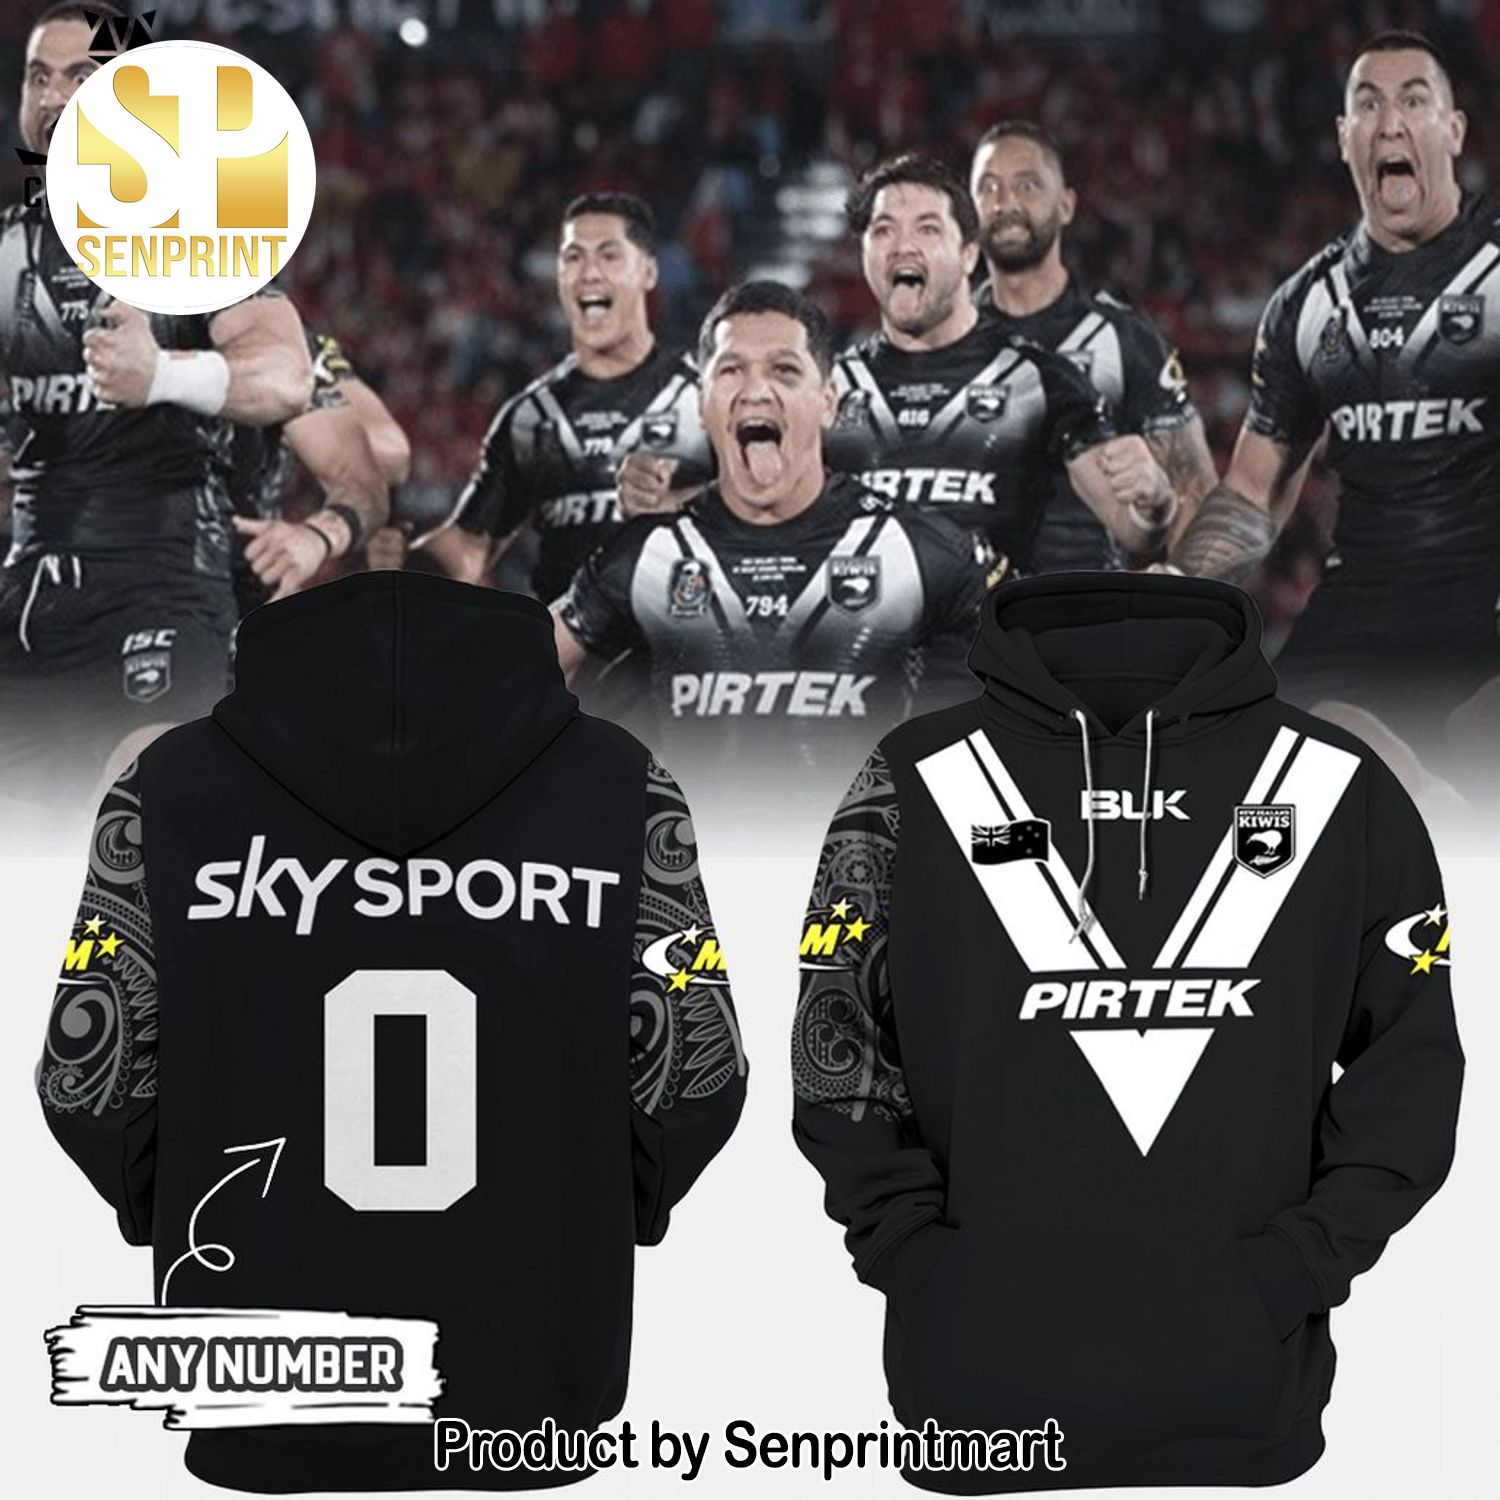 Personalized BLK Pirtek Kiwis NZRL New Zealand National Rugby League Black Design Full Printed Shirt